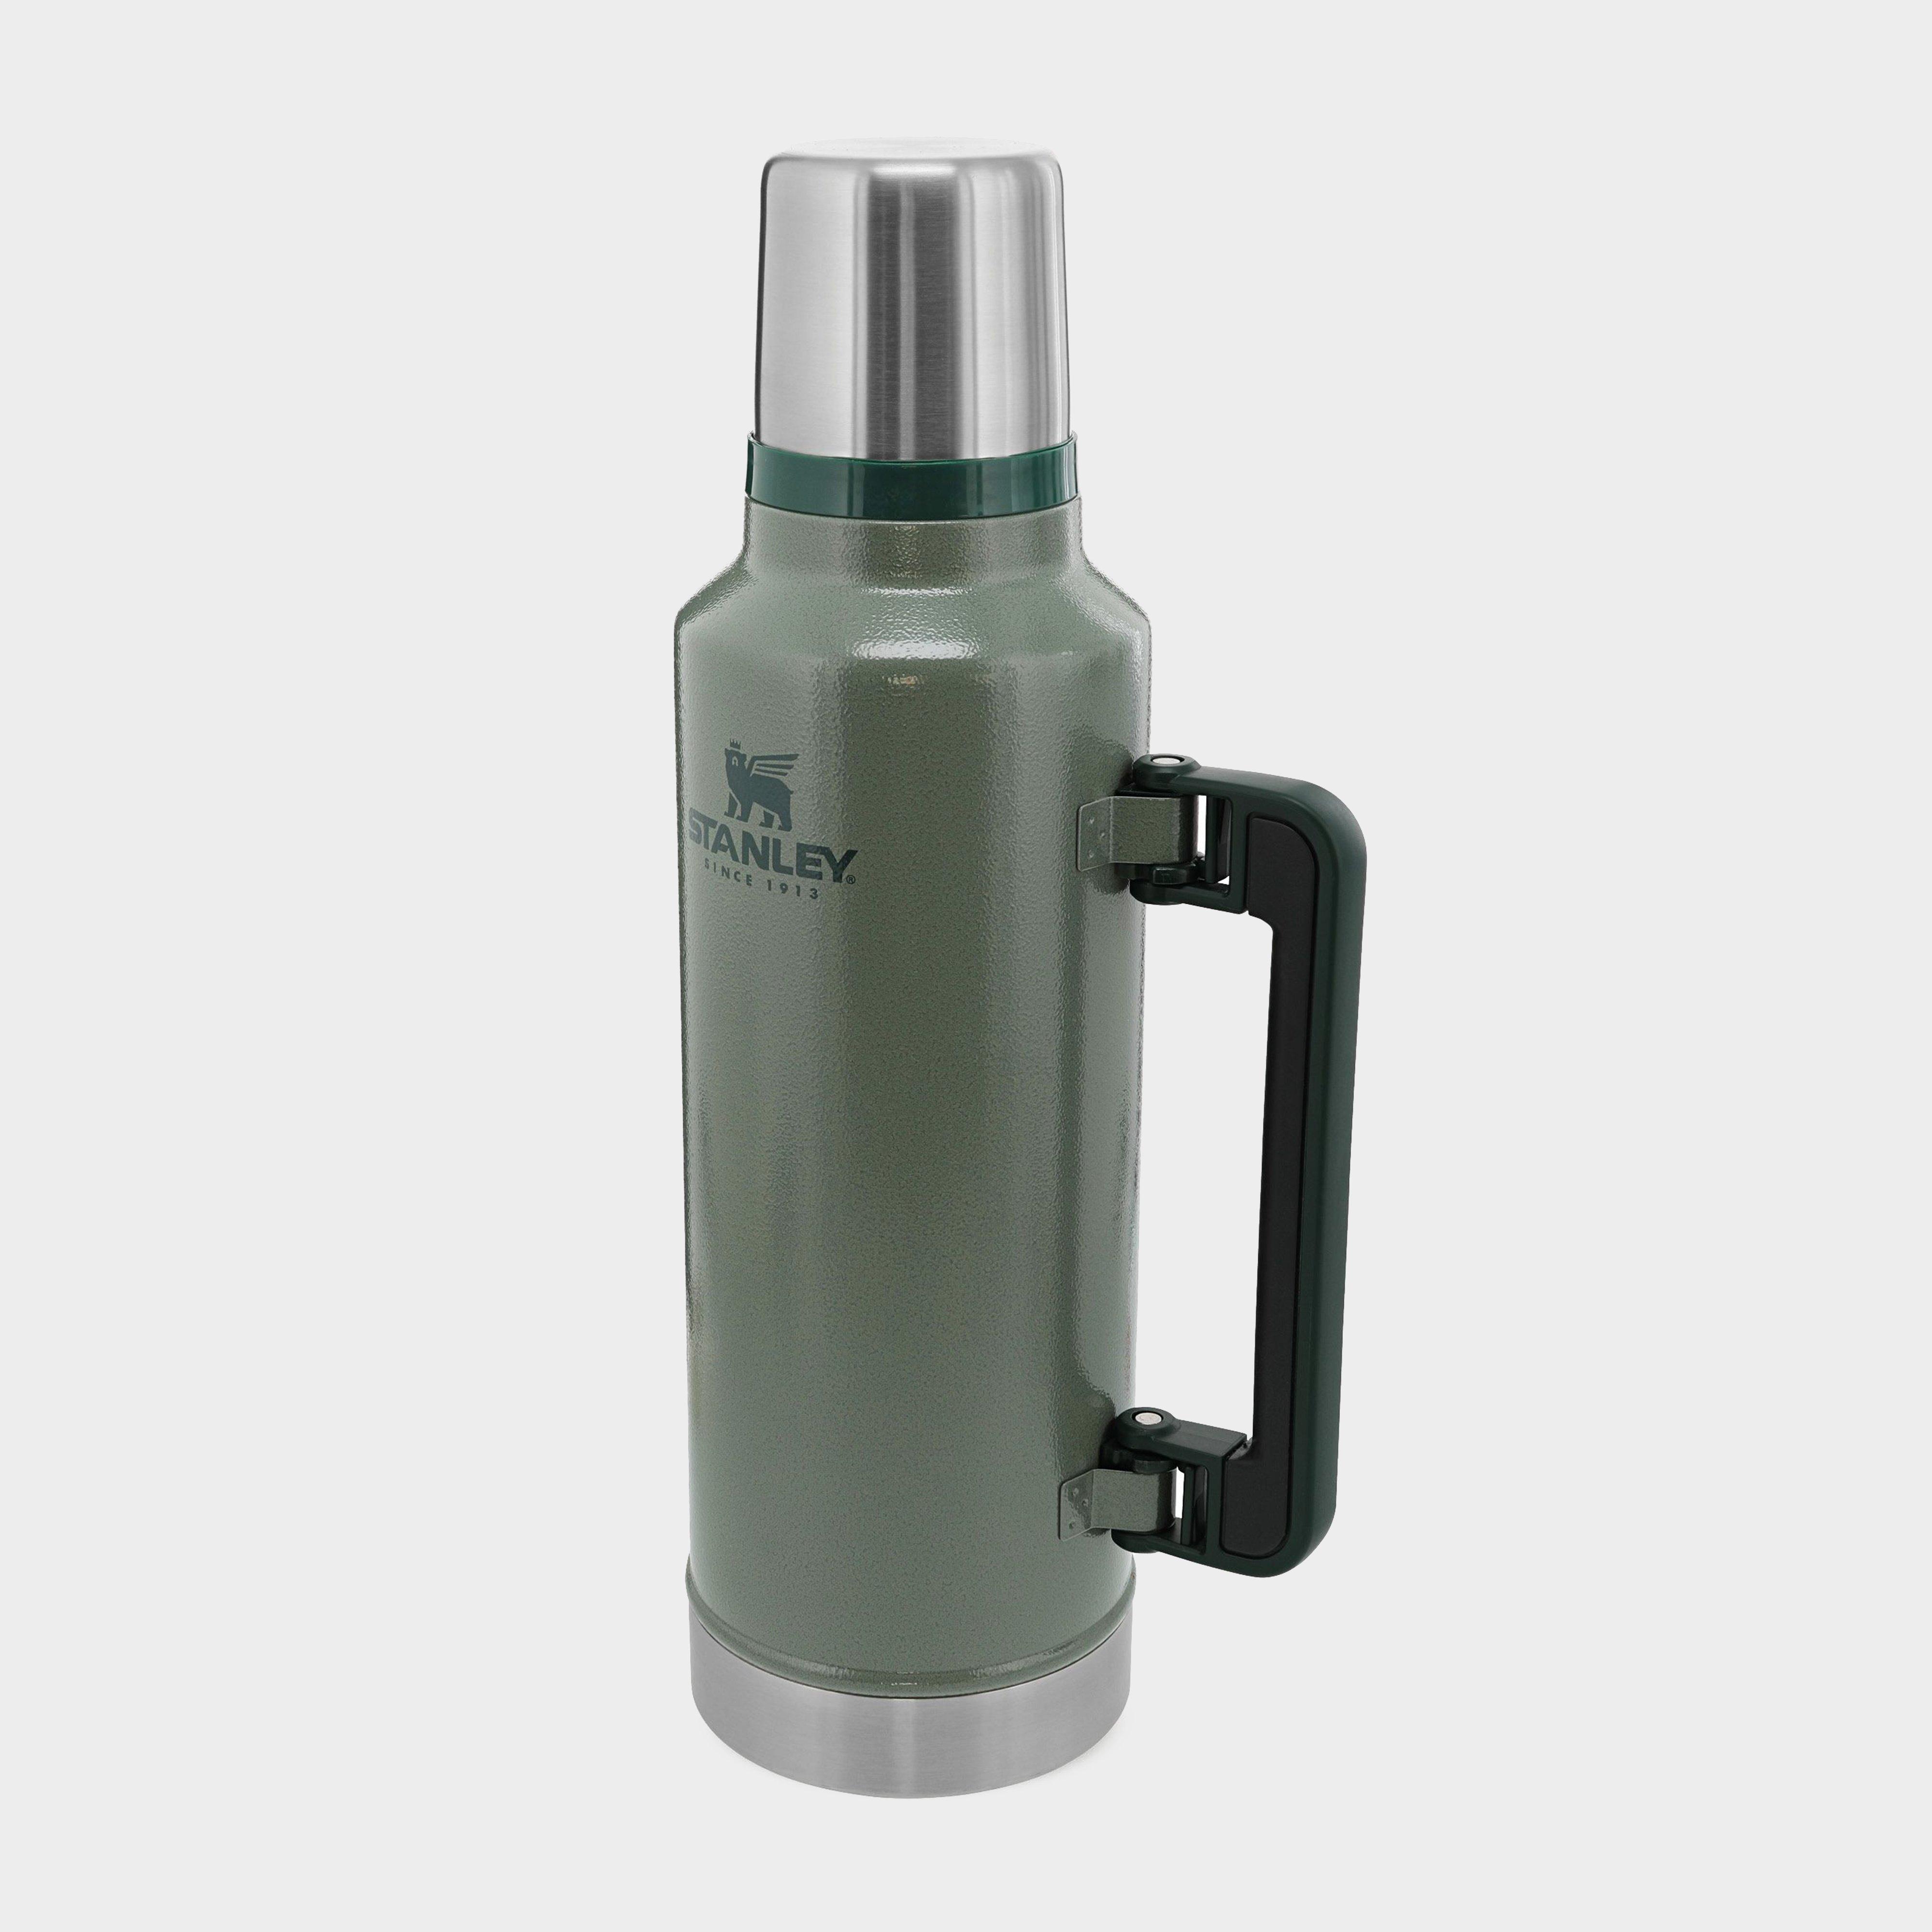 Stanley Stanley Classic Vacuum Bottle 1.9L - Green, Green